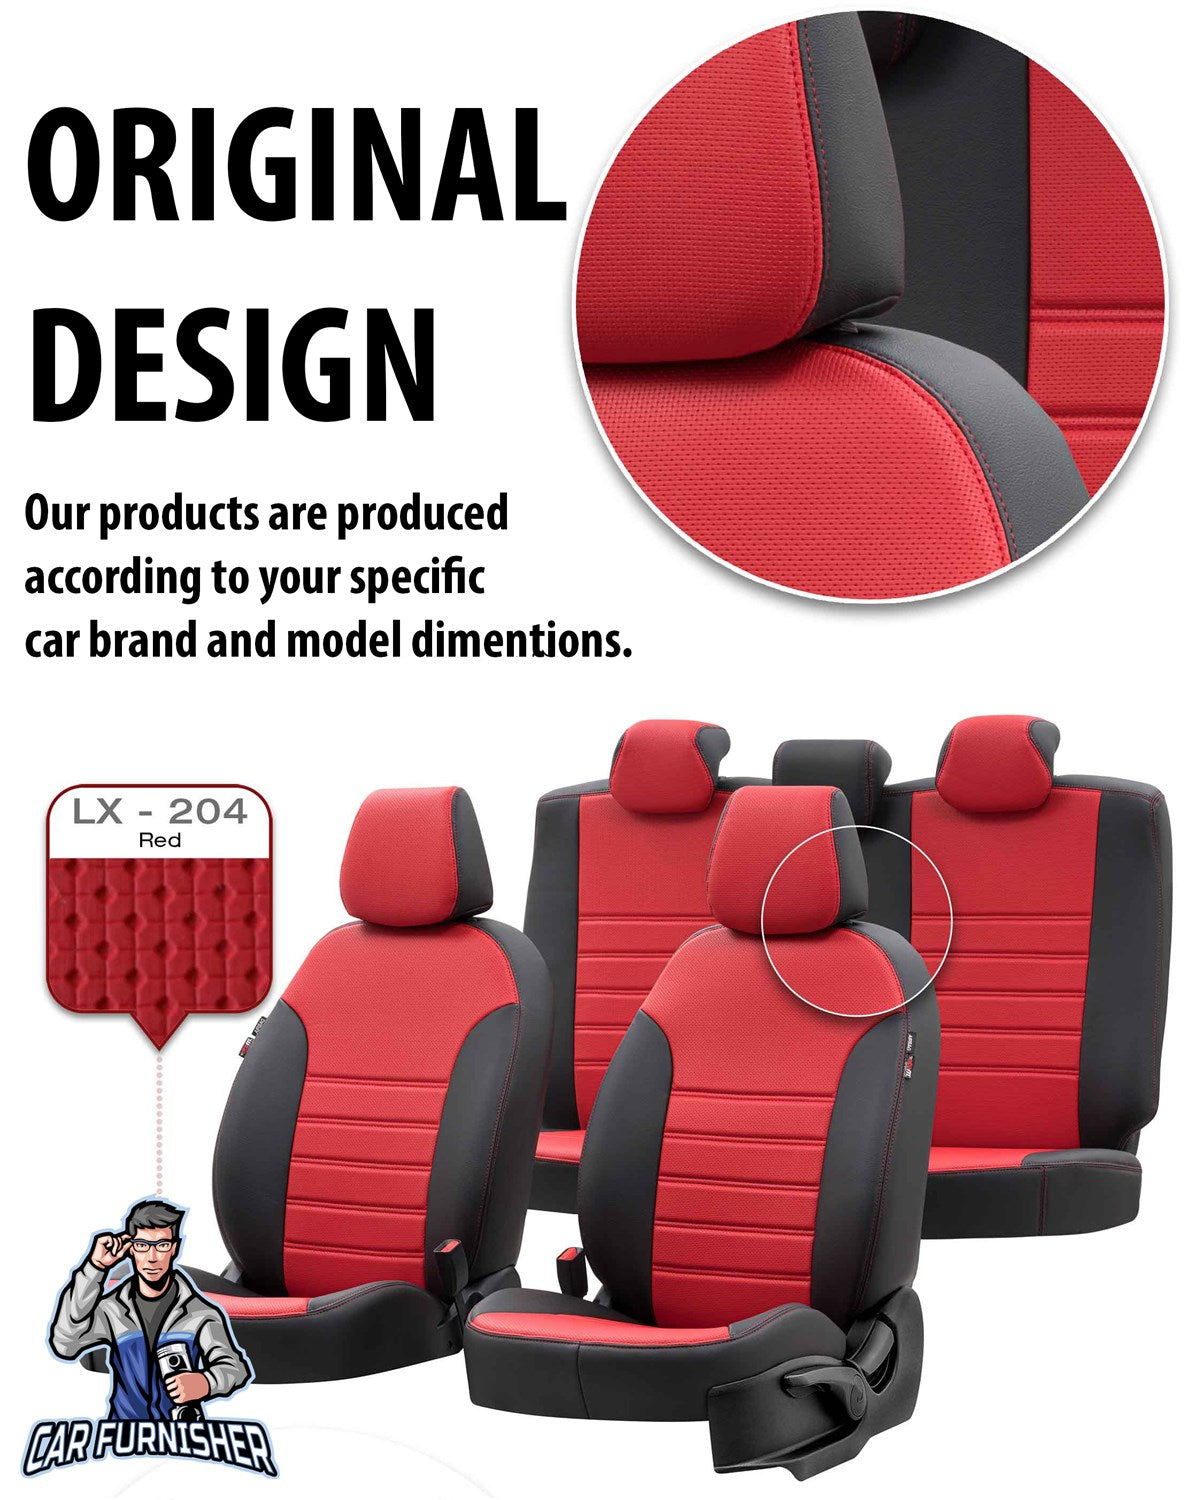 Volkswagen Transporter Seat Cover New York Leather Design Black Leather